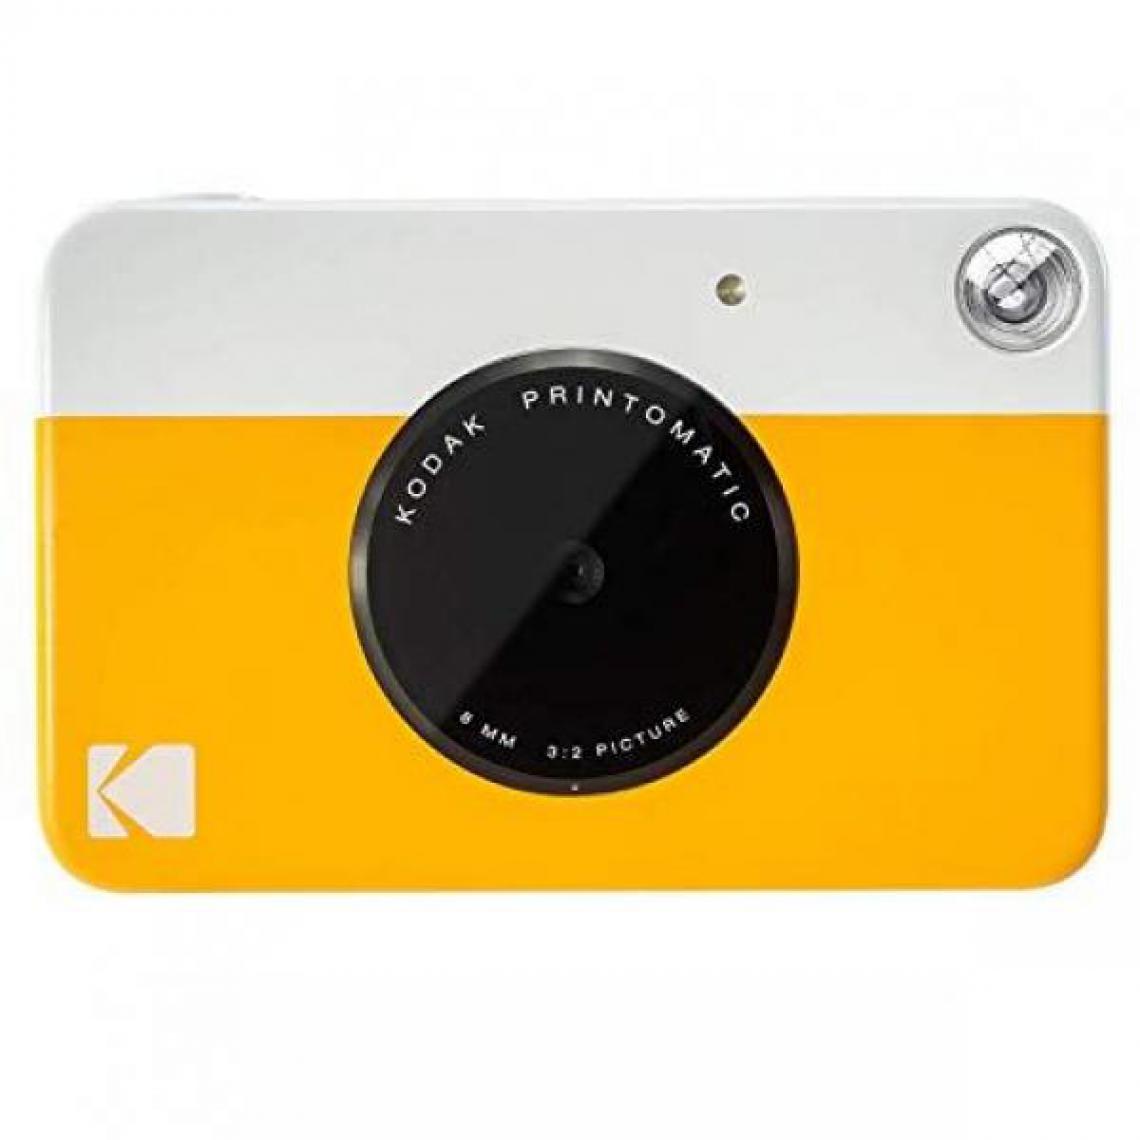 Kodak - Kodak Appareil Photo Instantane Printomatic - Appareil compact